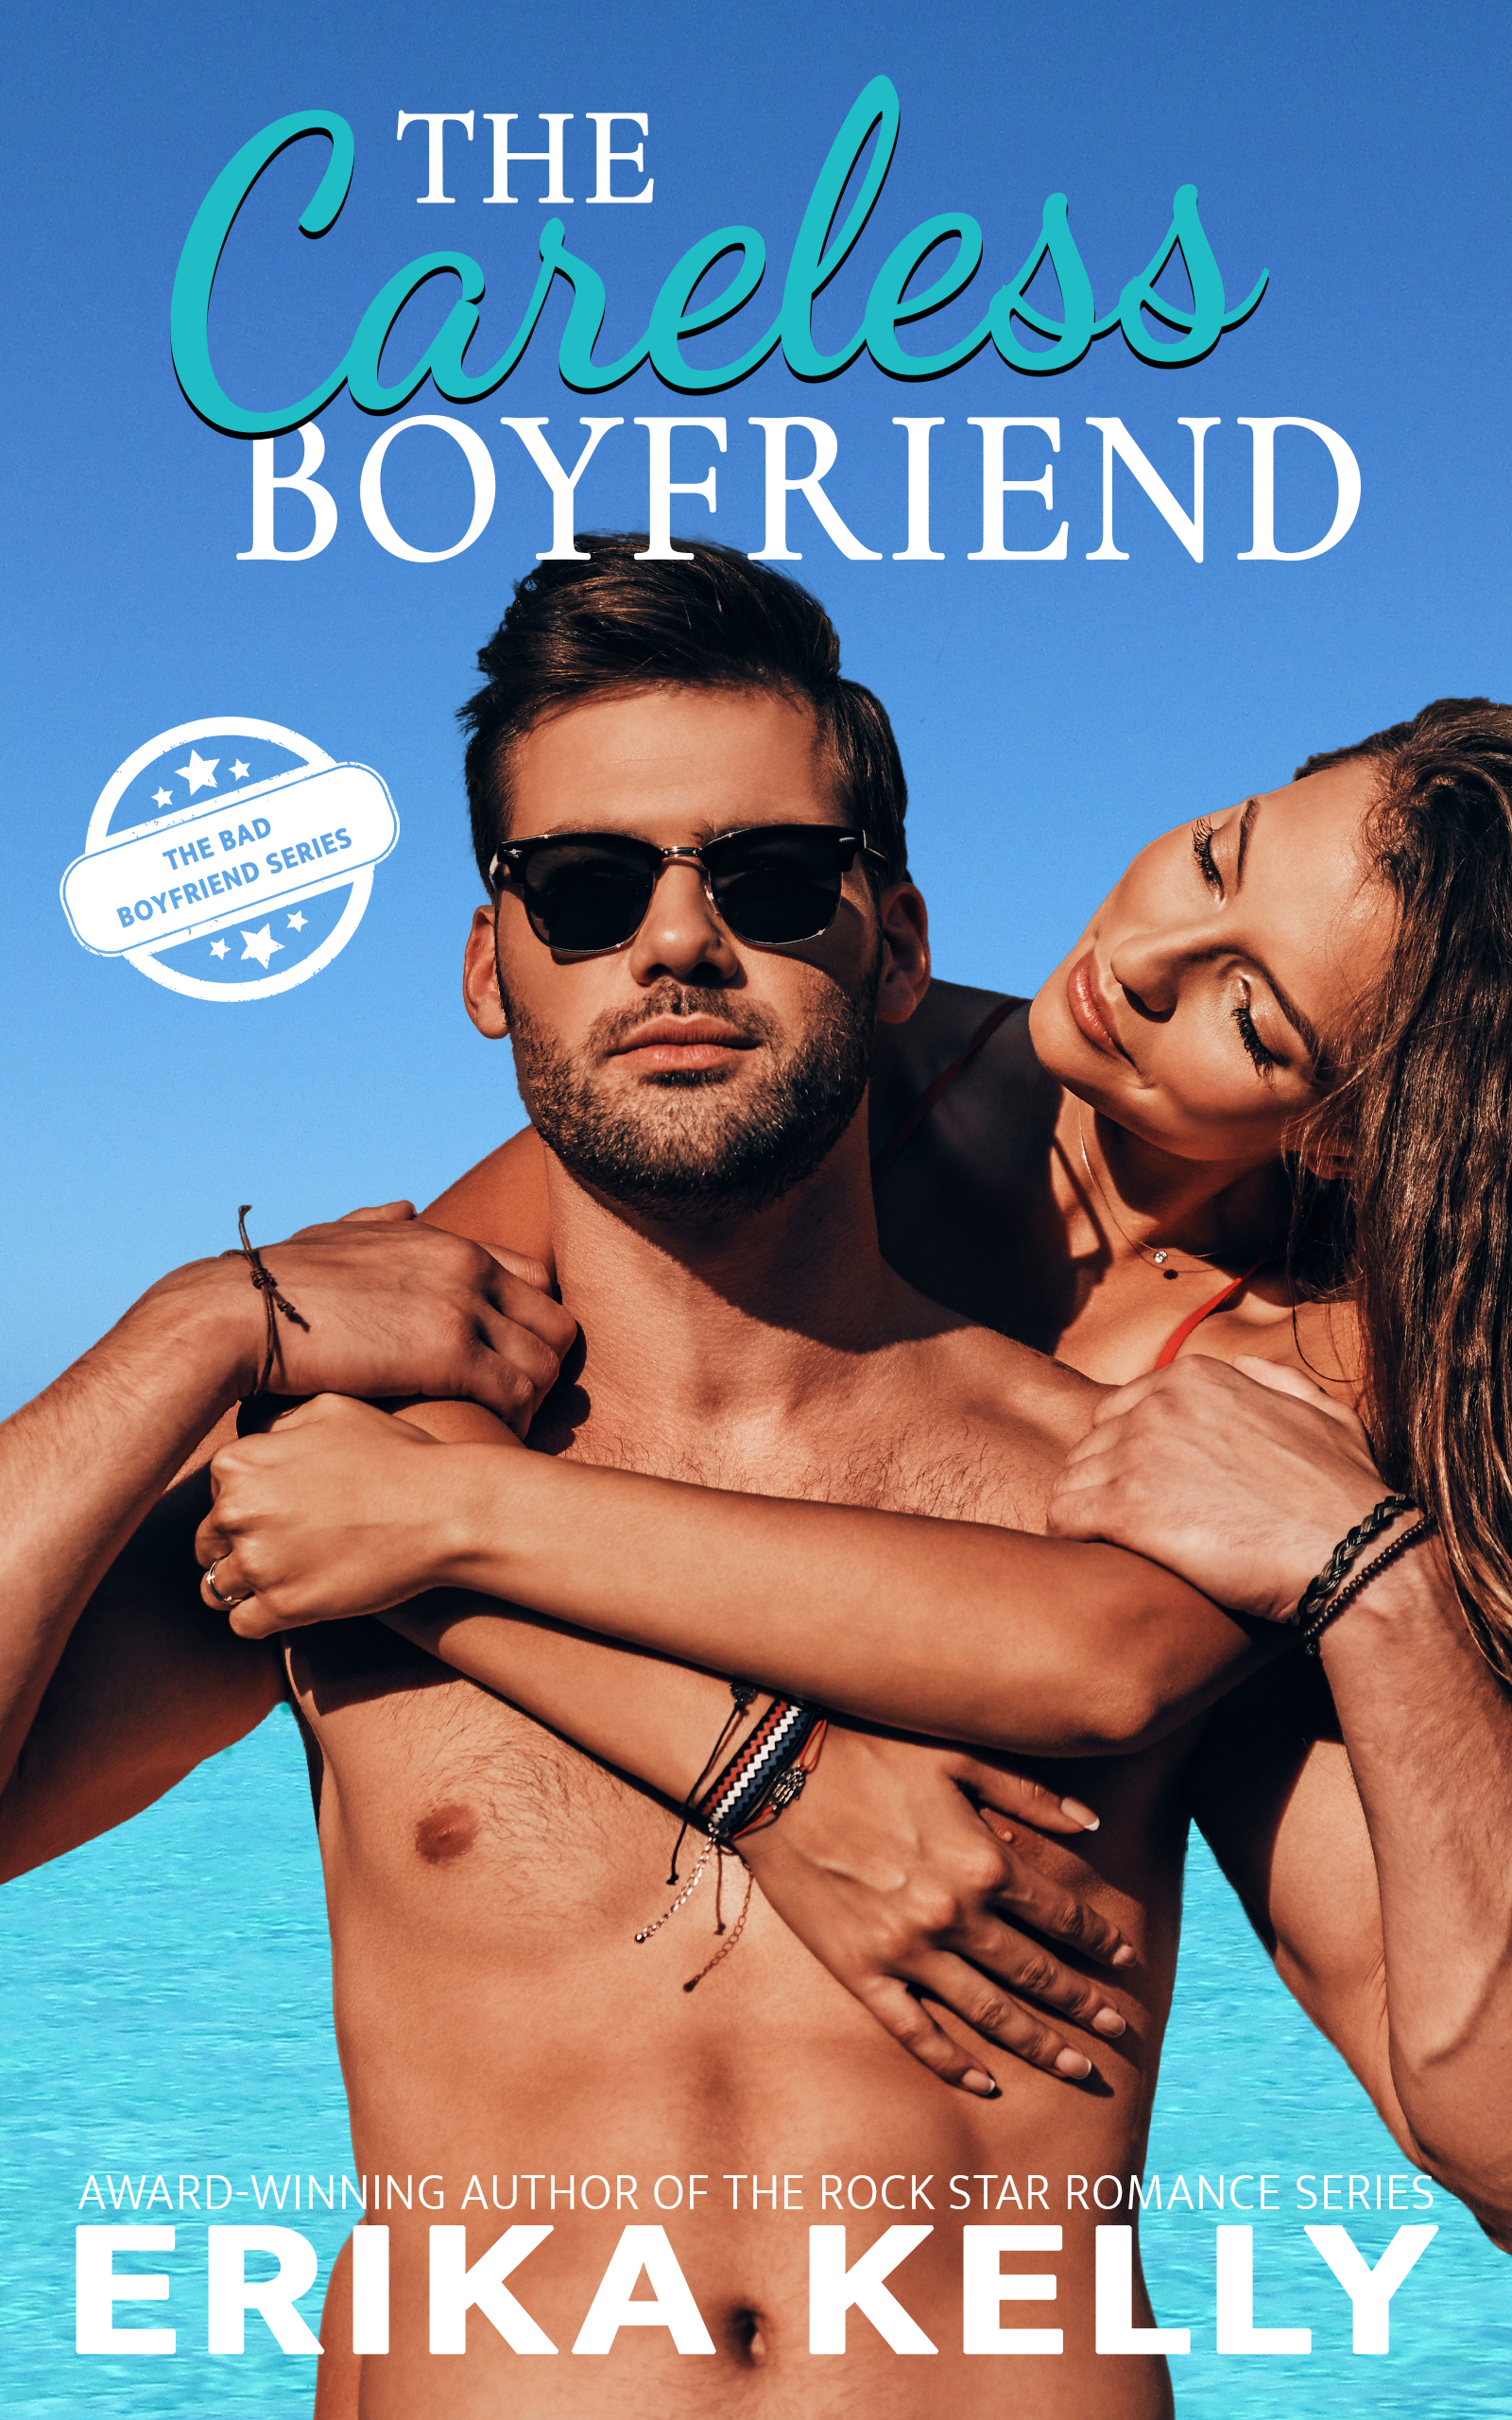 The Careless Boyfriend by Erika Kelly [Release Blitz]